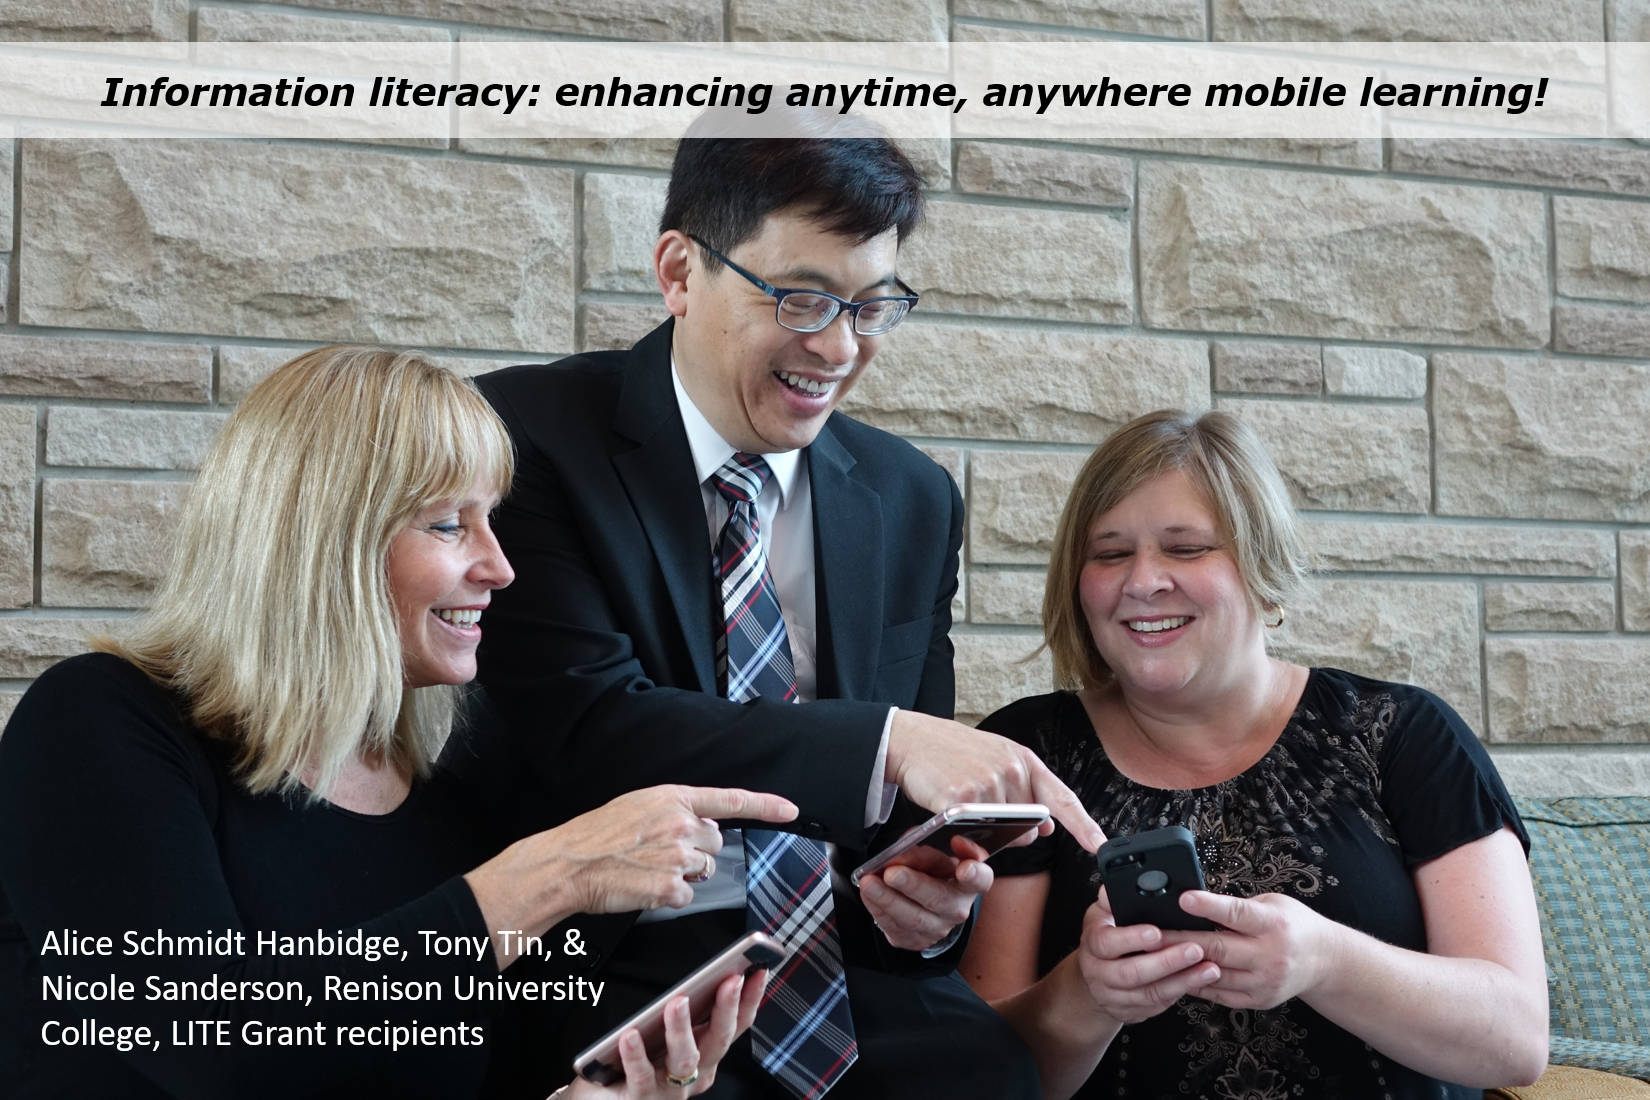 LITE recipients Alice Schmidt Hanbidge, Tony Tin, and Nicole Sanderson (Renison) investigate mobile information literacy